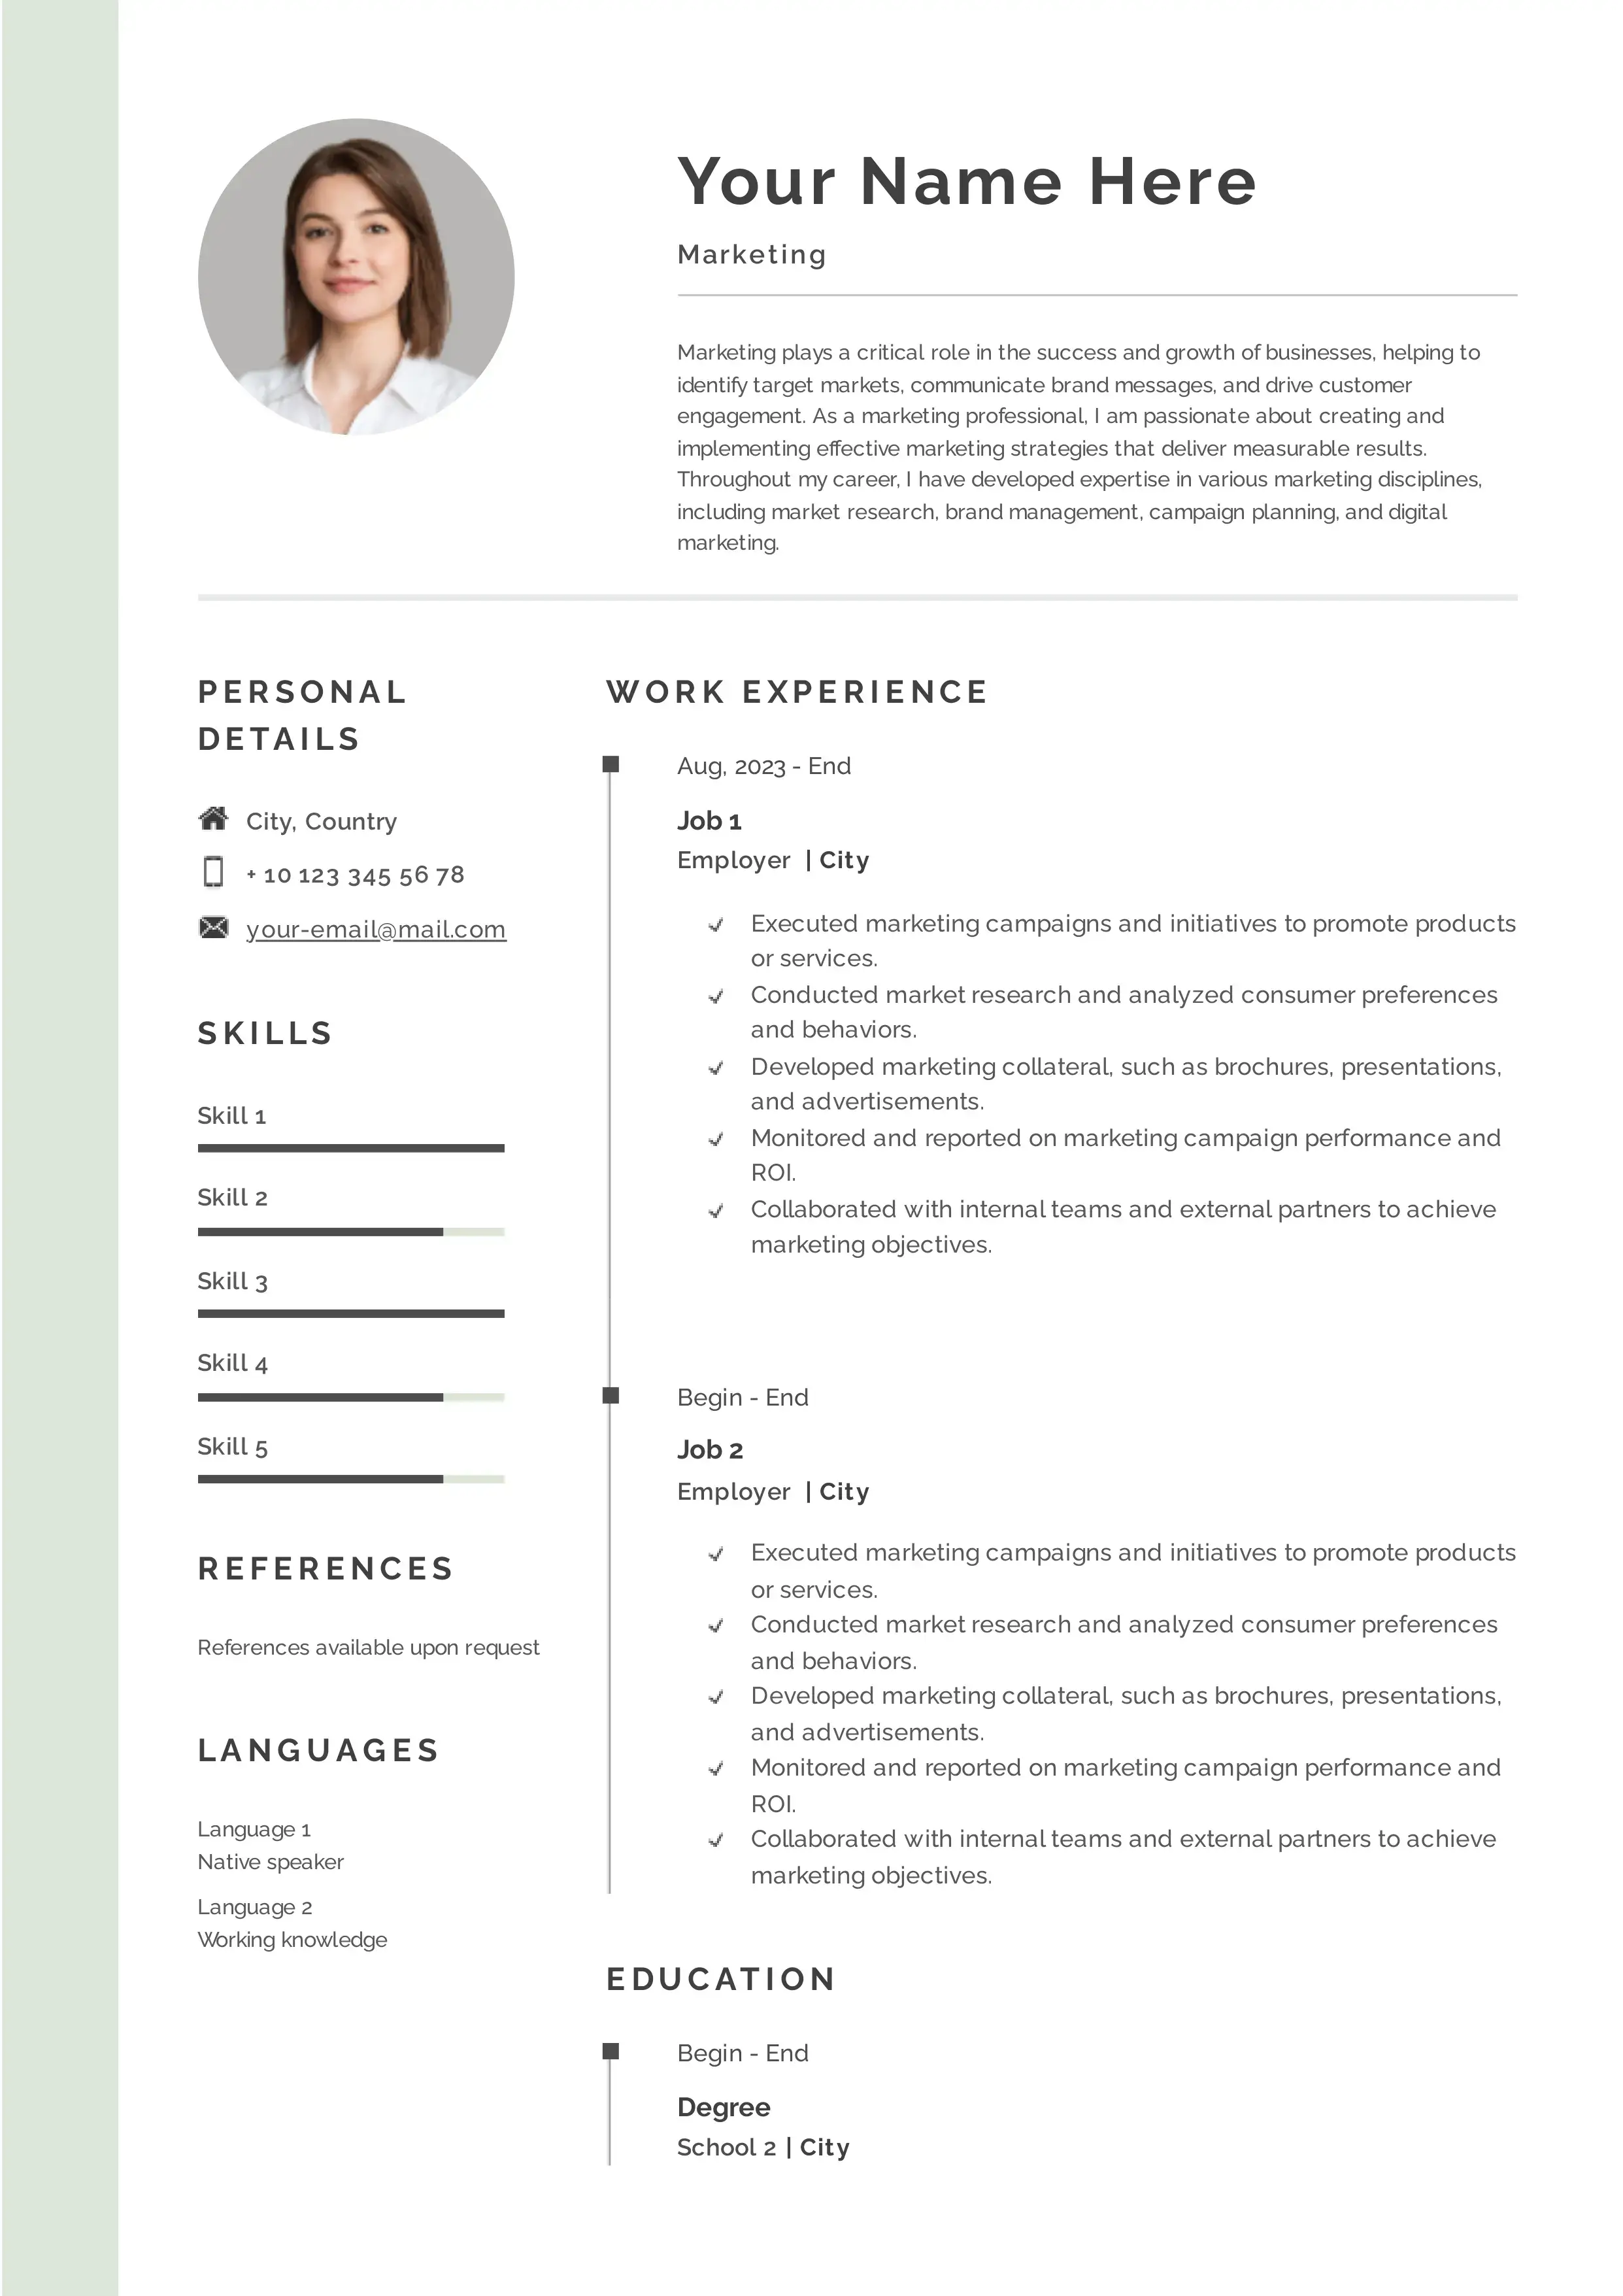 Marketing resume examples CV